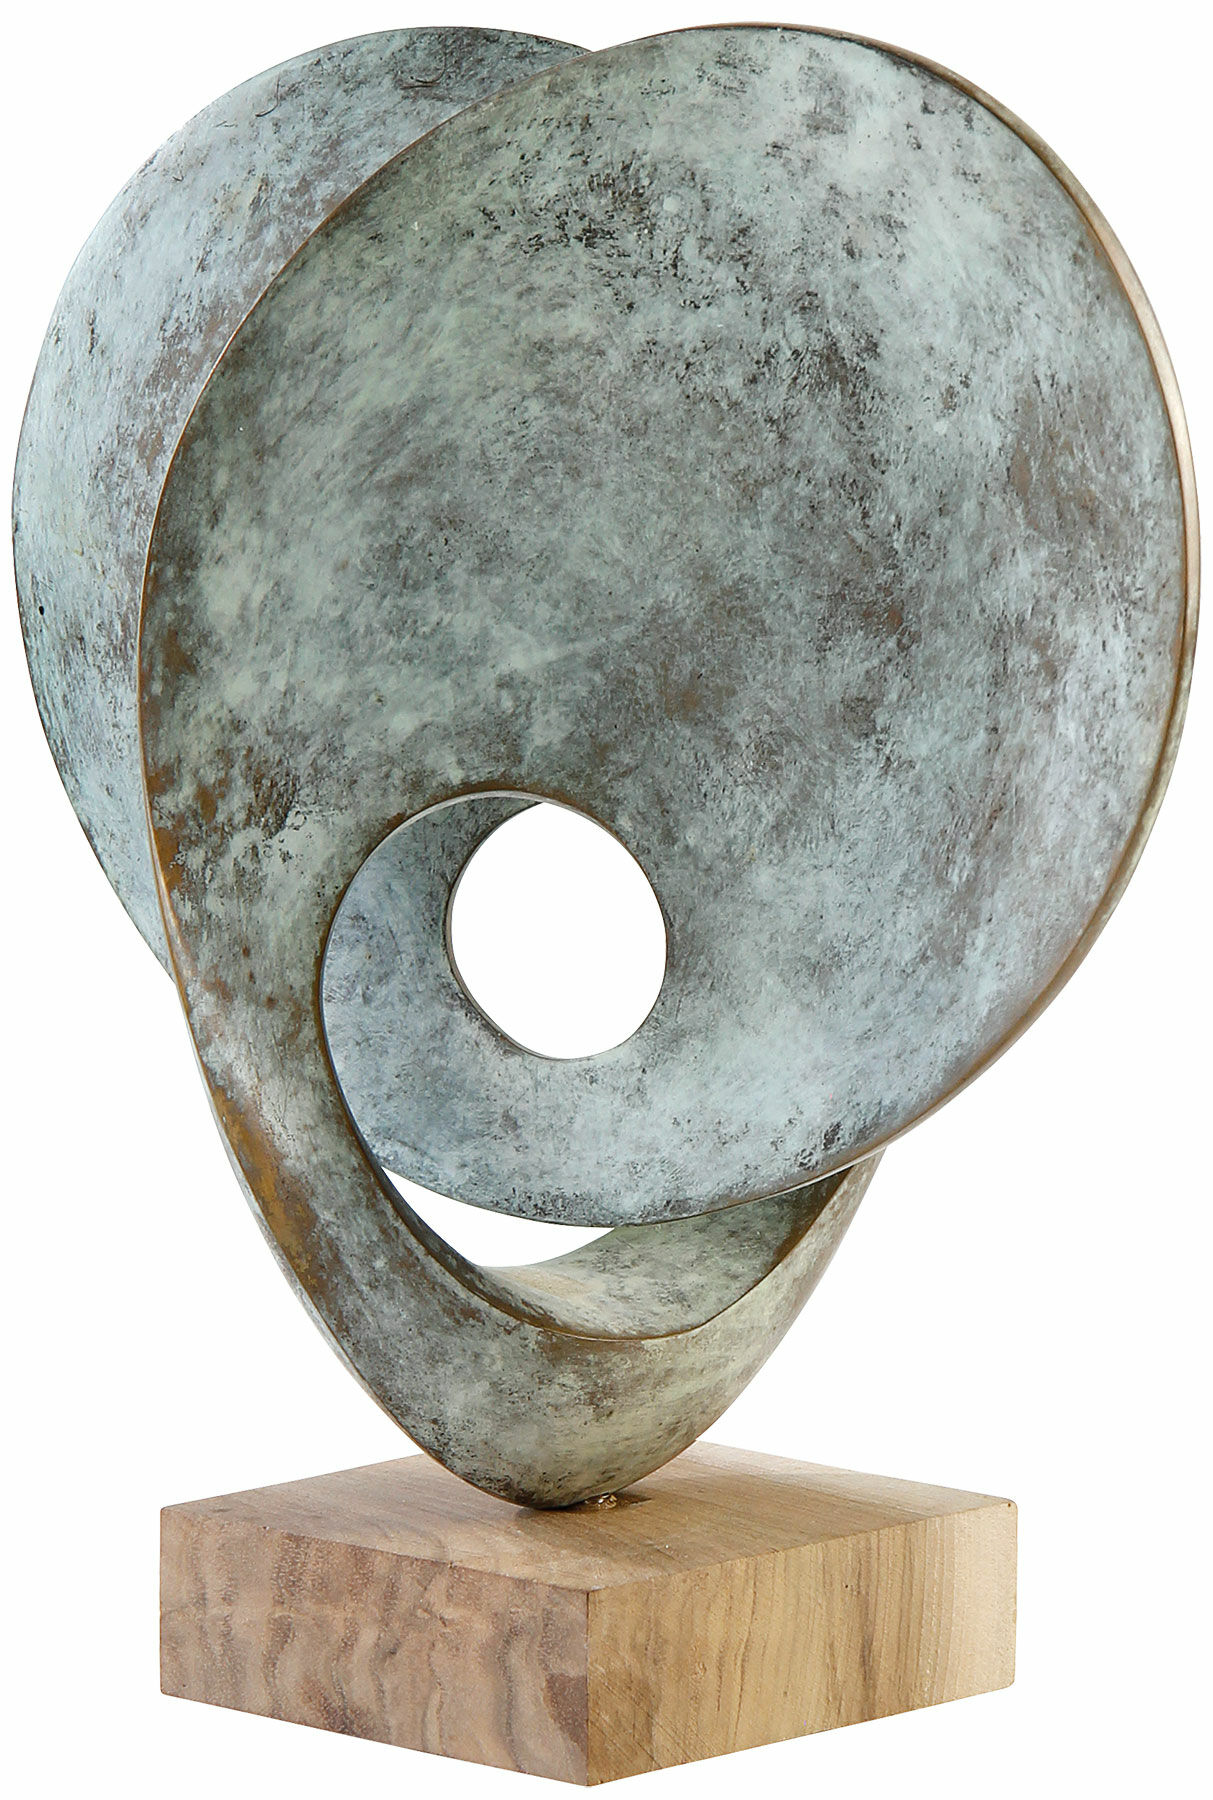 Sculpture "Journey I" (2015), bronze by Yves Rasch